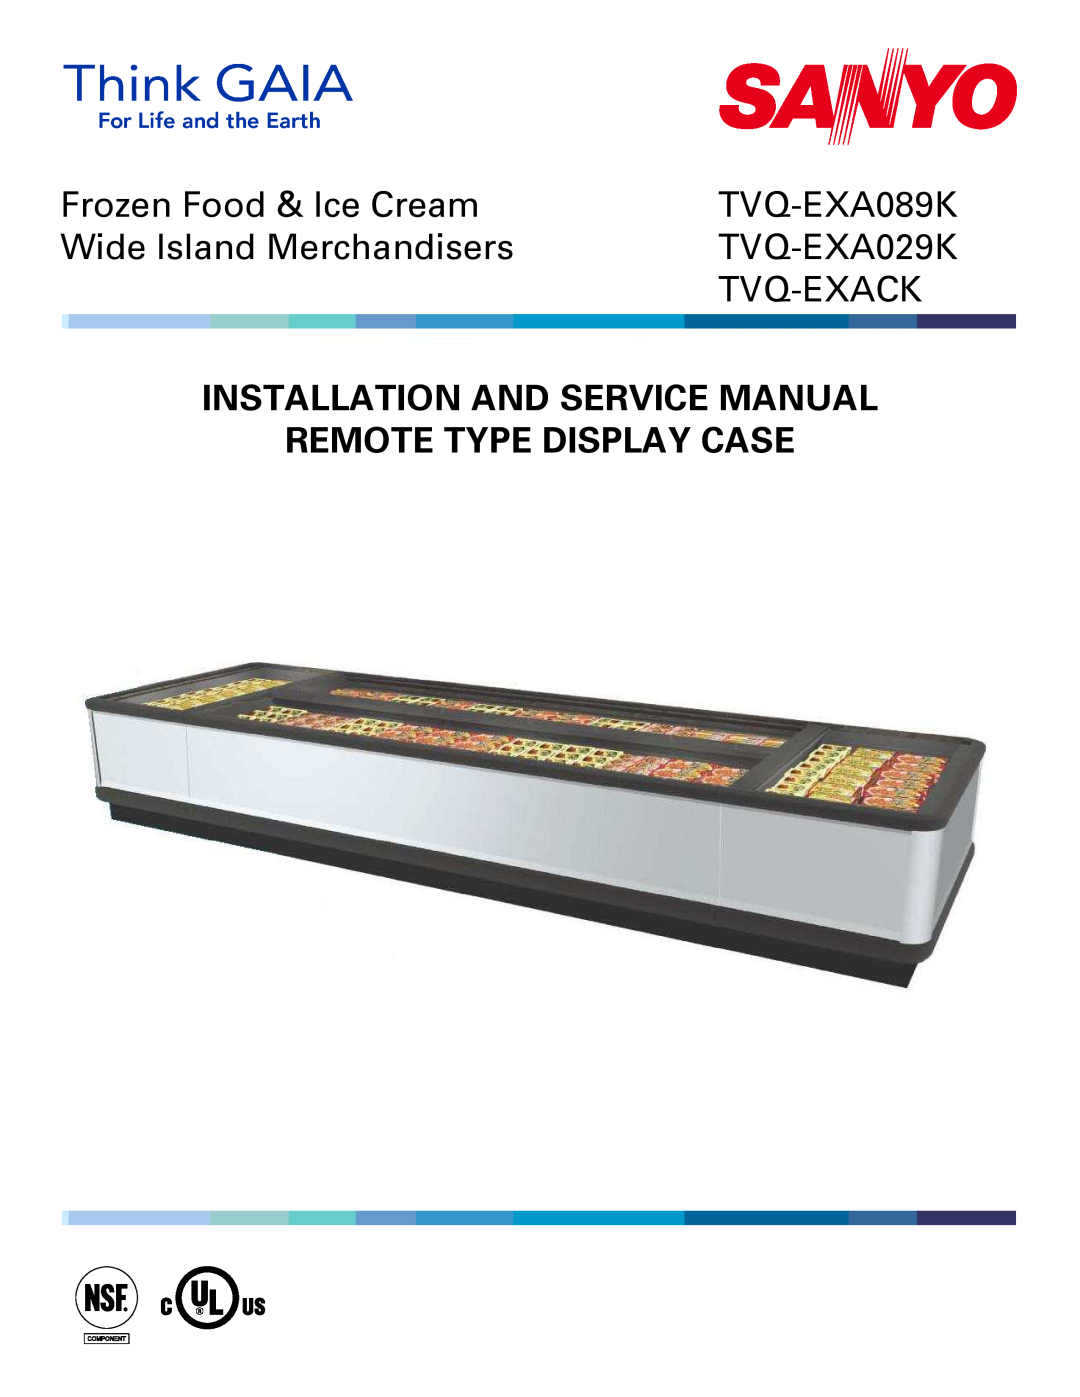 Sanyo TVQ-EXA089K service manual Frozen Food & Ice Cream, Wide Island Merchandisers, TVQ-EXA029K, Tvq-Exack 